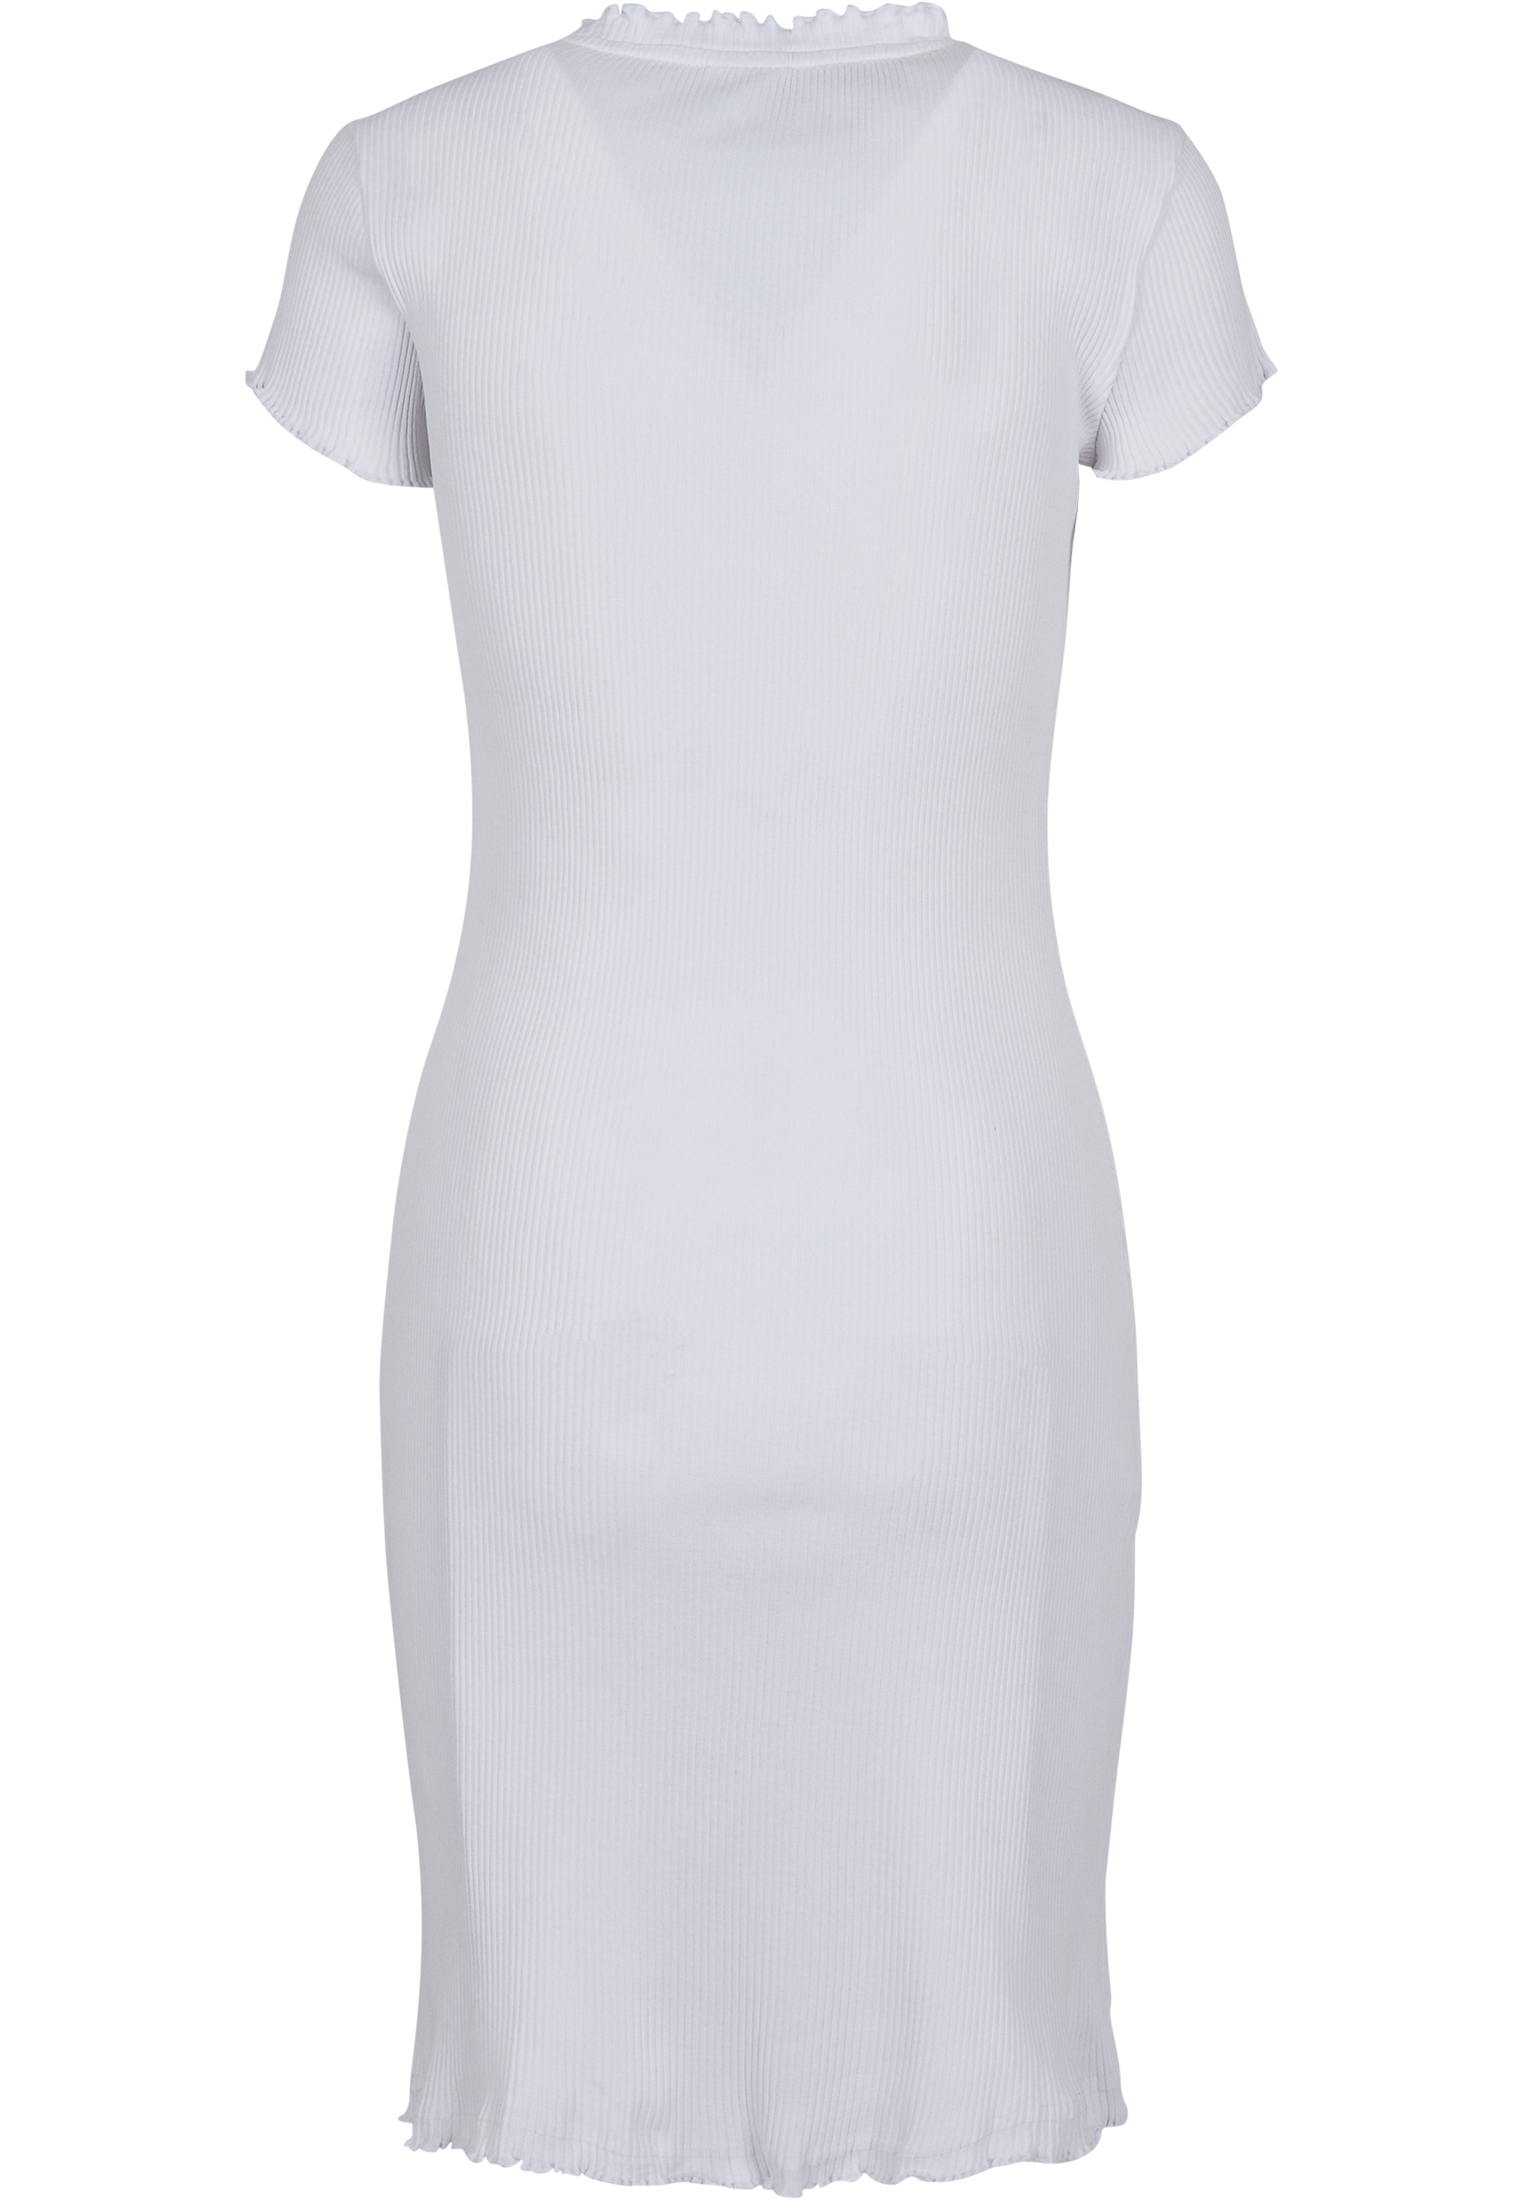 Curvy Ladies Rib Tee Dress in Farbe white